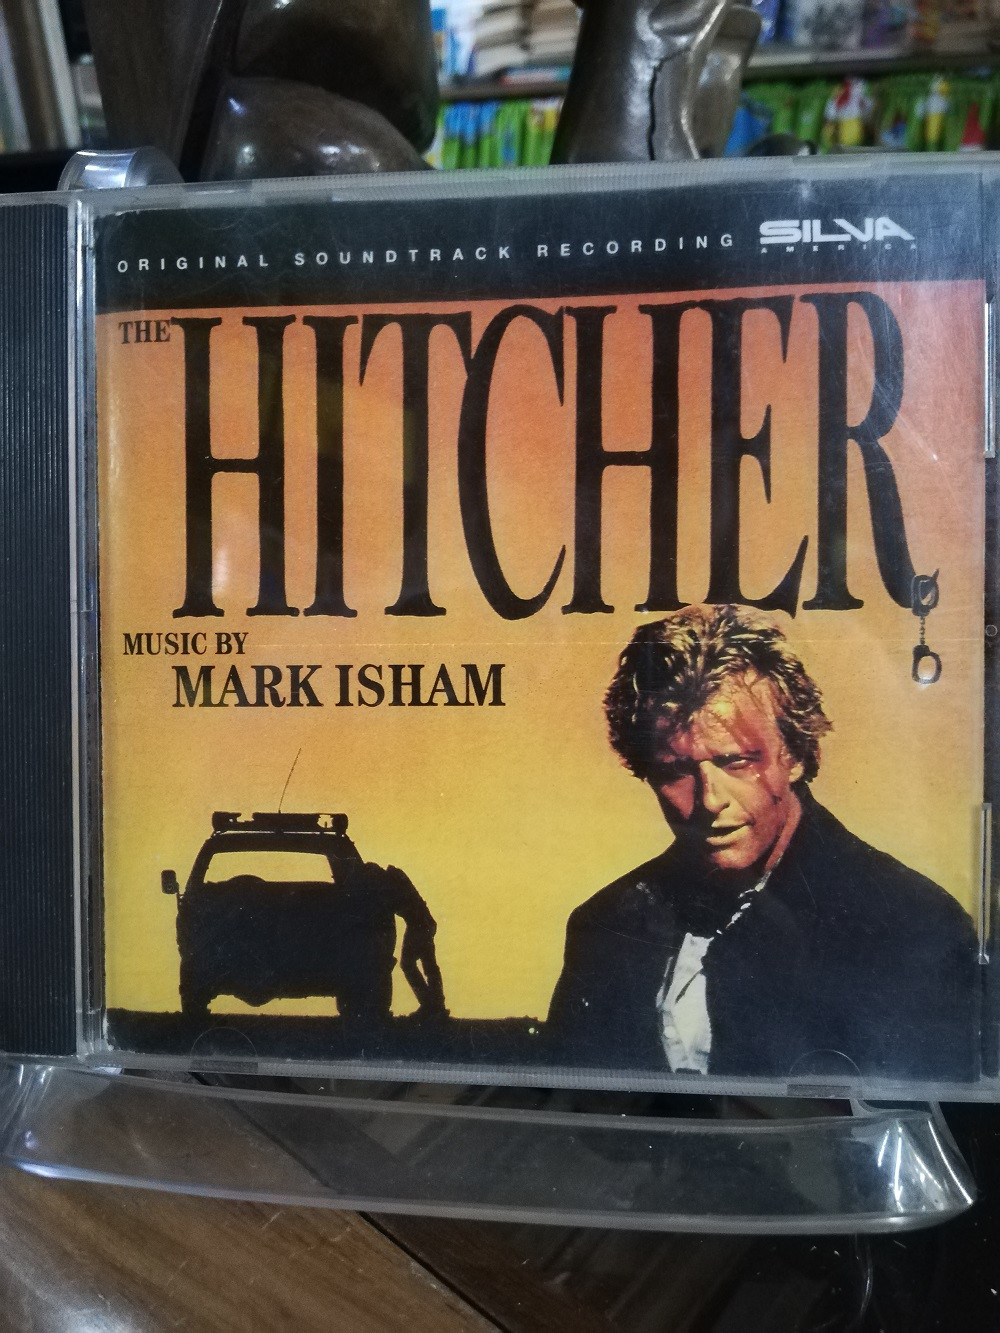 Imagen CD THE HITCHER - ORIGINAL SOUNDTRACK RECORDING 1